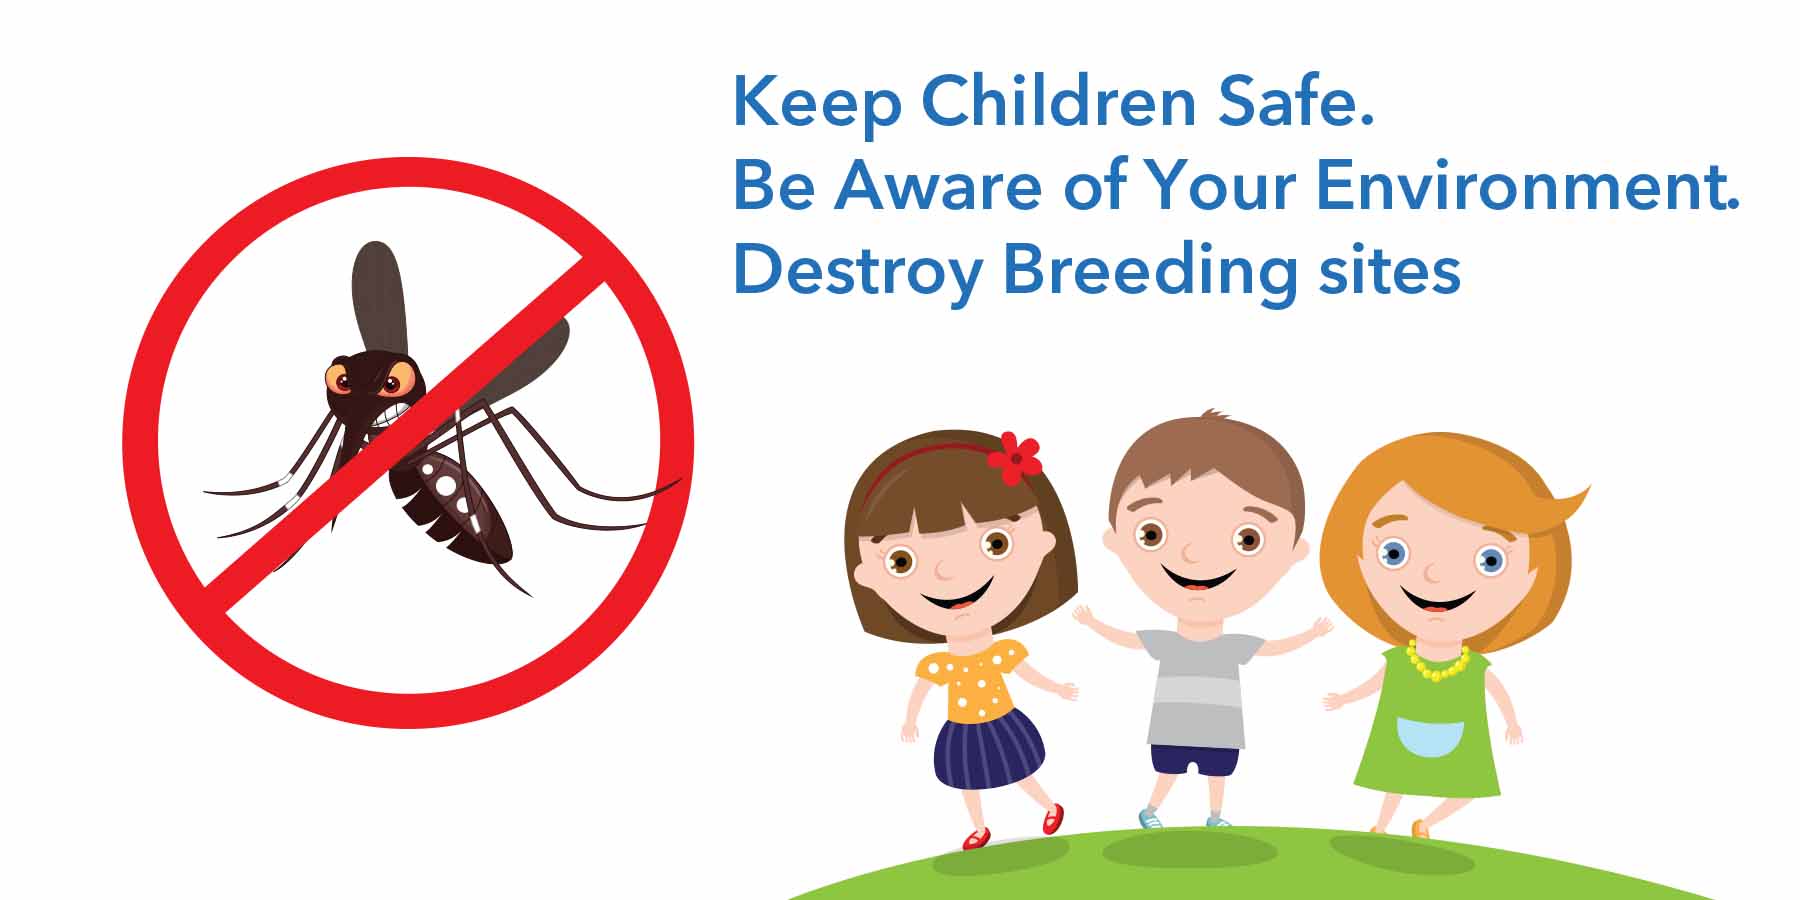 Dengue: How to keep children safe